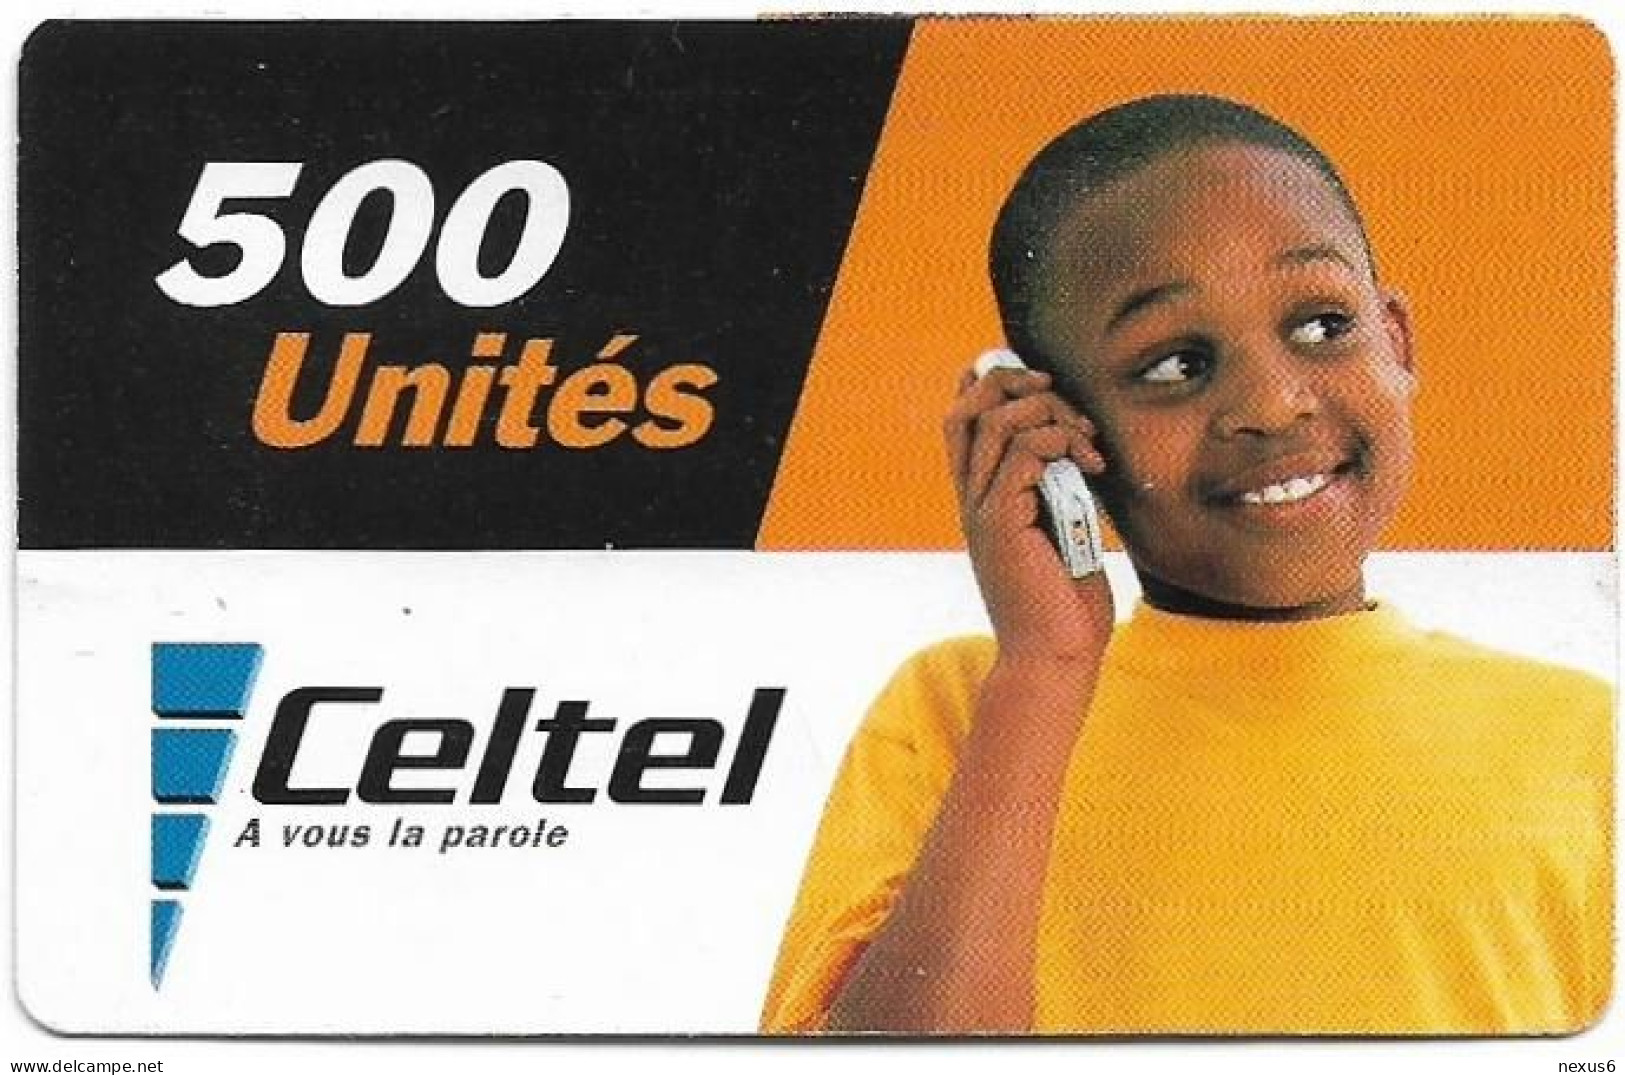 Congo Republic (Kinshasa) - Celtel - Young Boy At Phone (Reverse 2), Exp. 31.12.2004, GSM Refill 500Units, Used - Congo